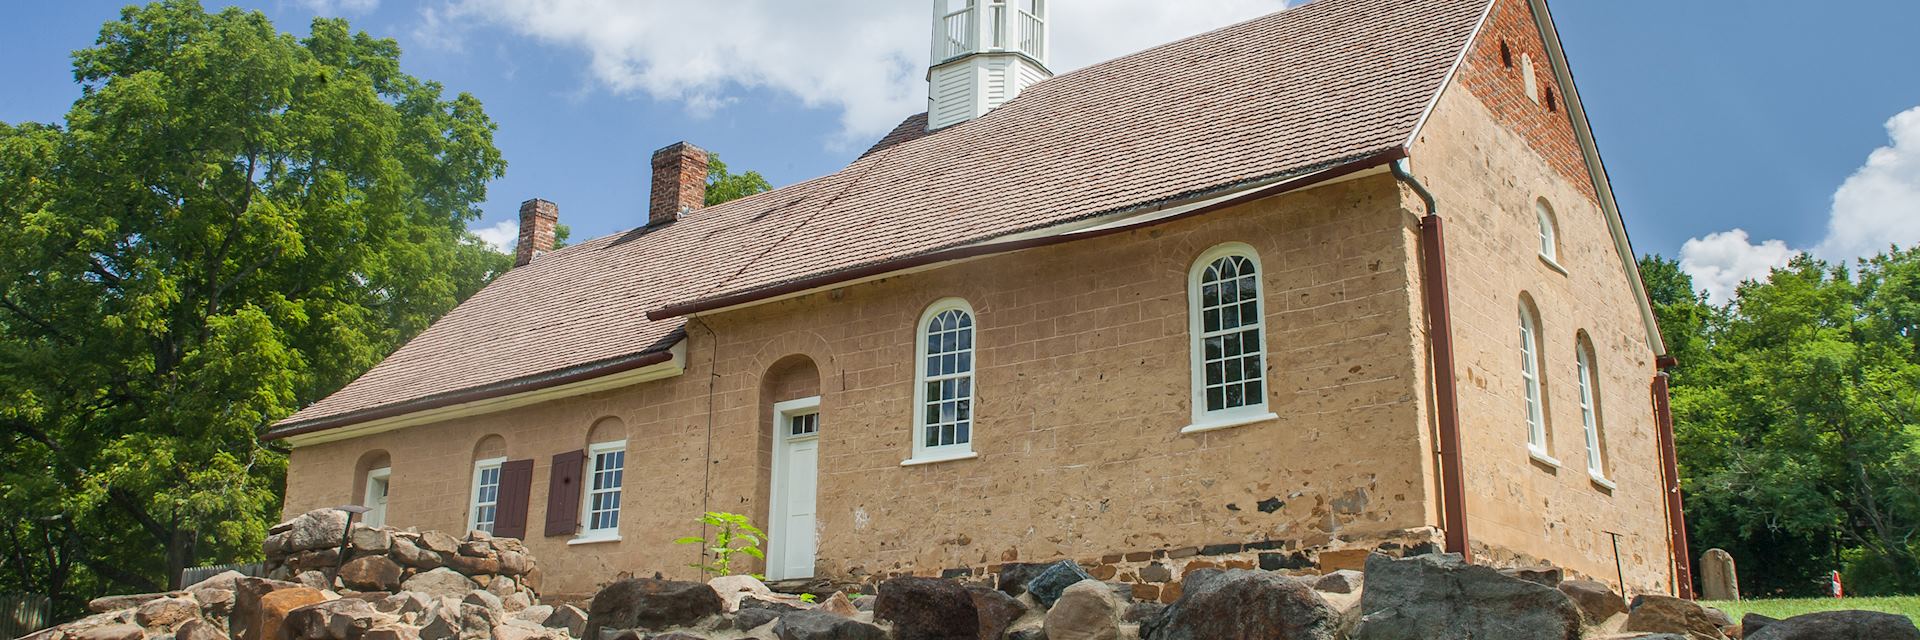 Church in Winston-Salem